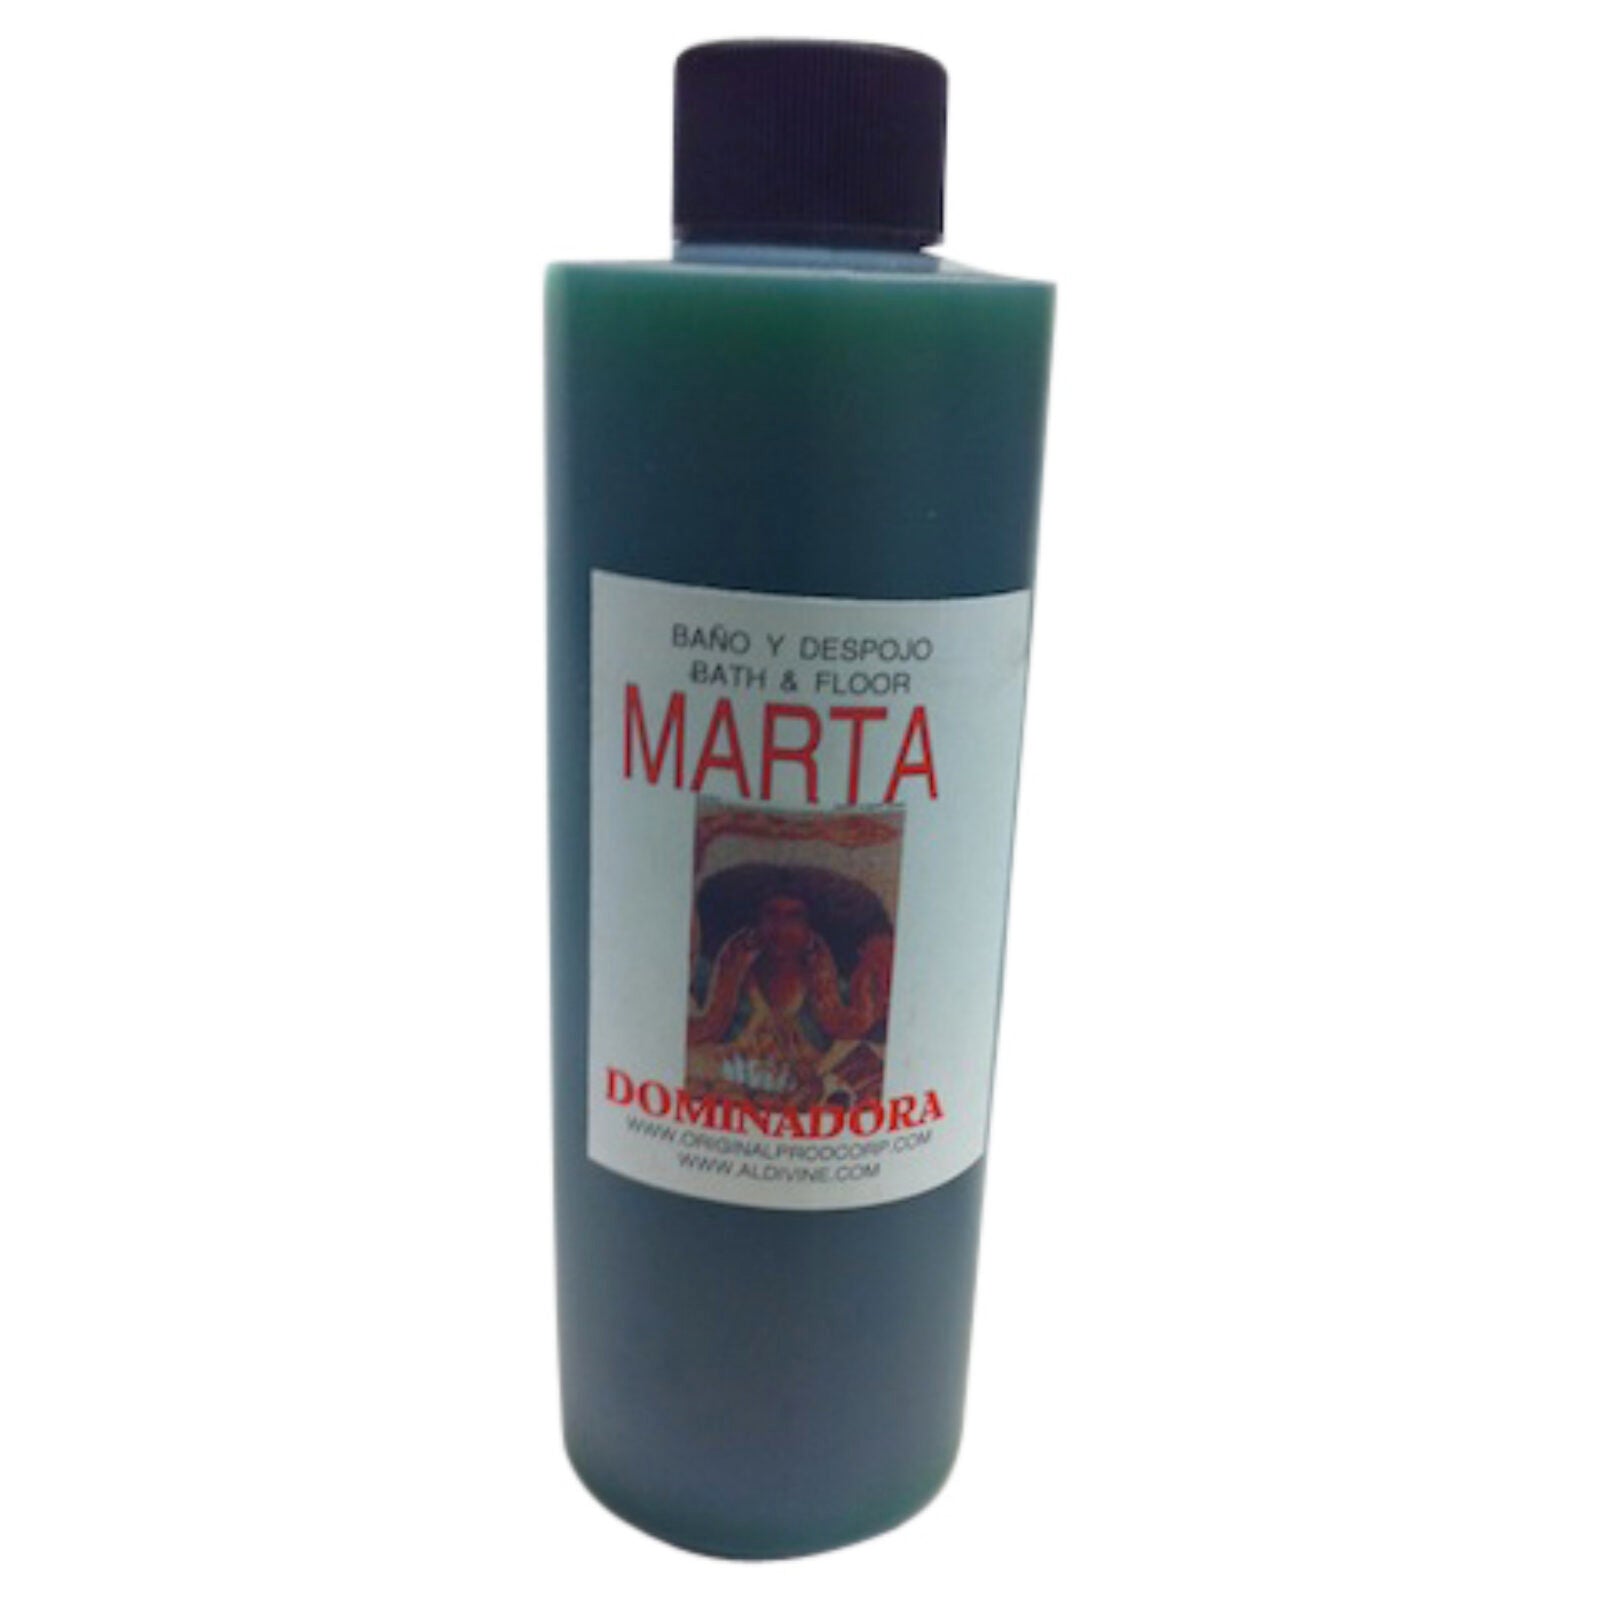 Martha the Dominator (Martha Dominadora) Bath & Floor Wash Check My Vibes